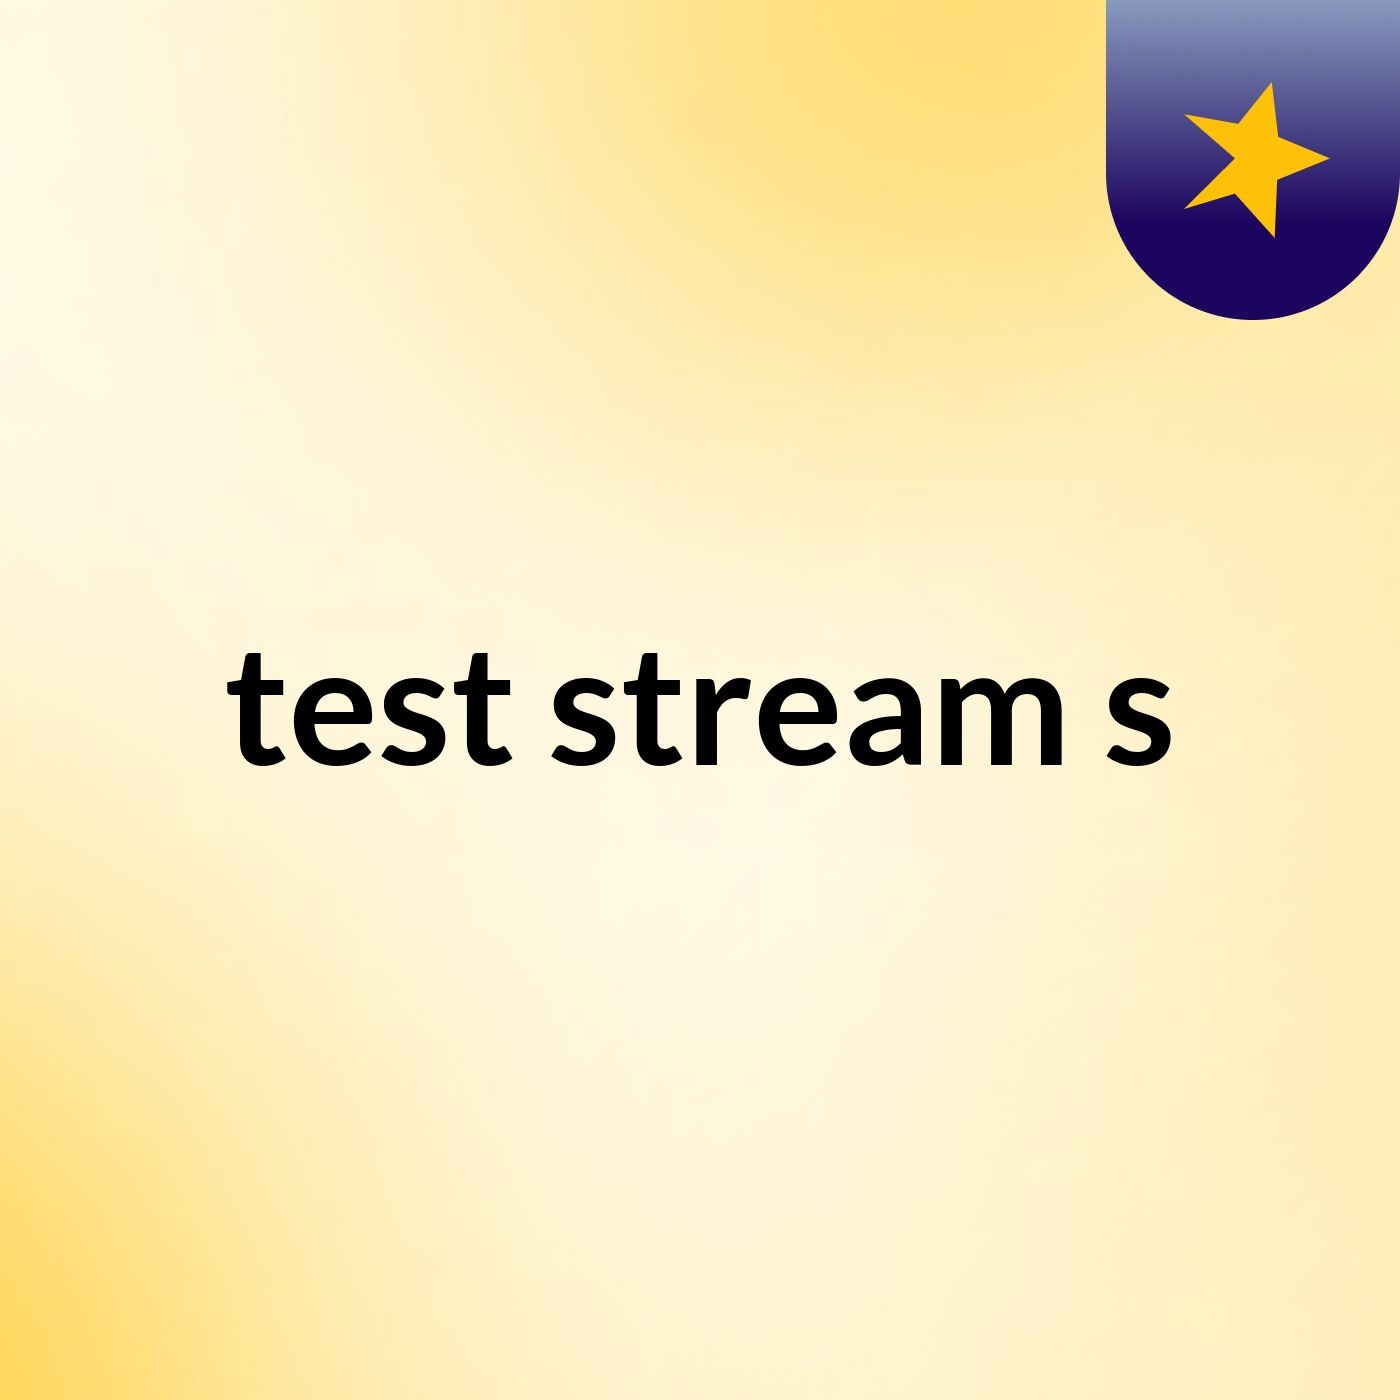 test stream s